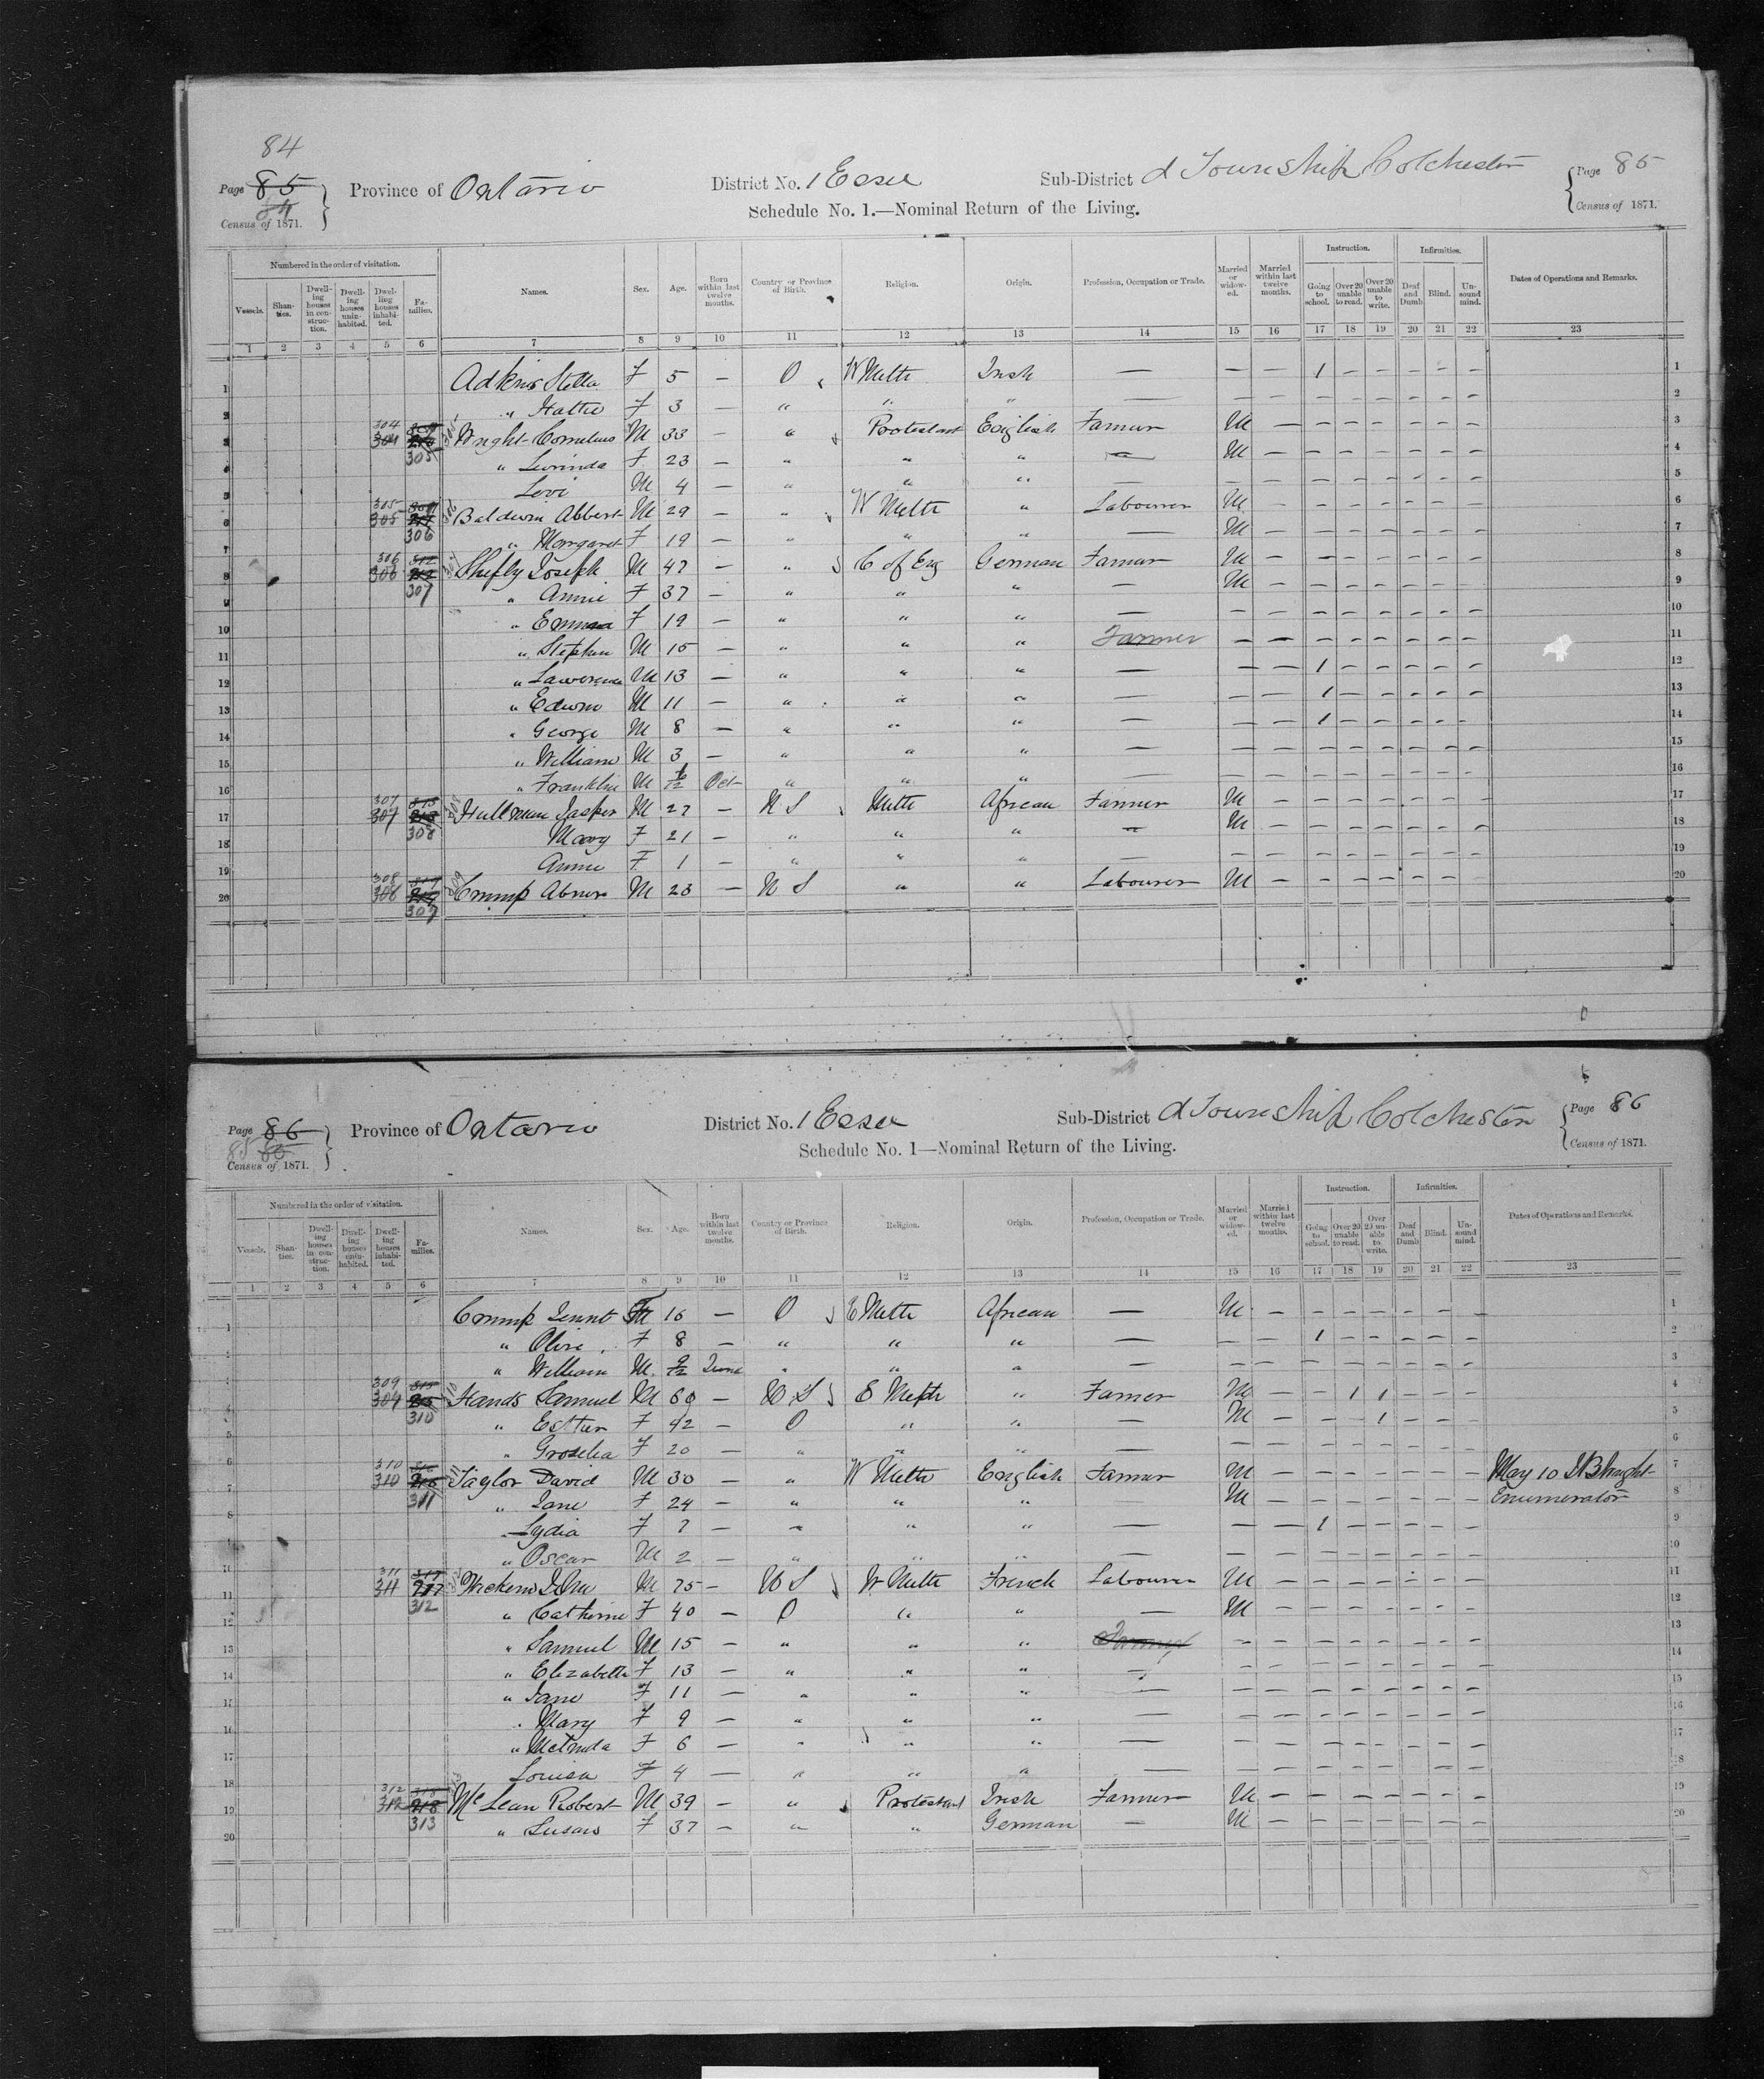 WEEK 1 - 1871 Census for Jasper Hullum